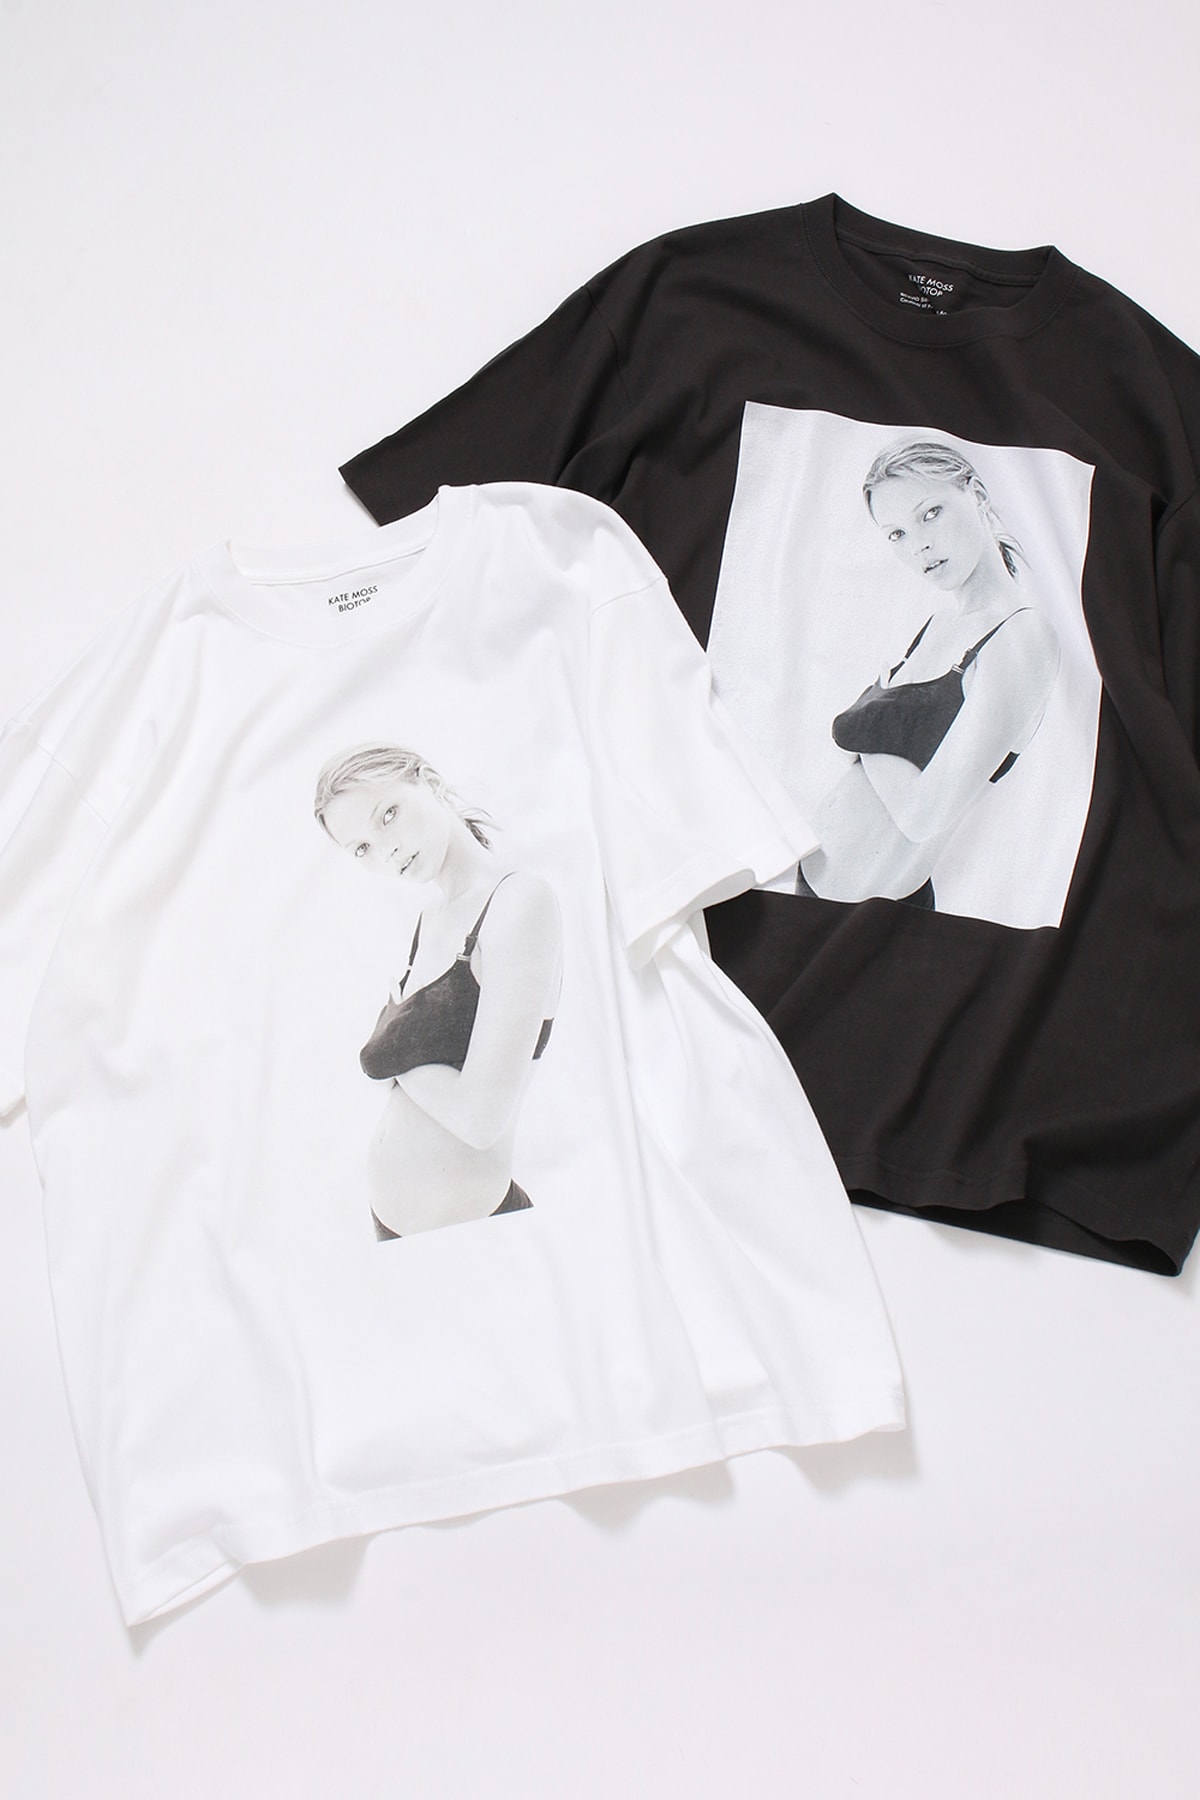 BIOTOP 正式推出 Kate Moss x David Sims 最新聯乘 T-Shirt